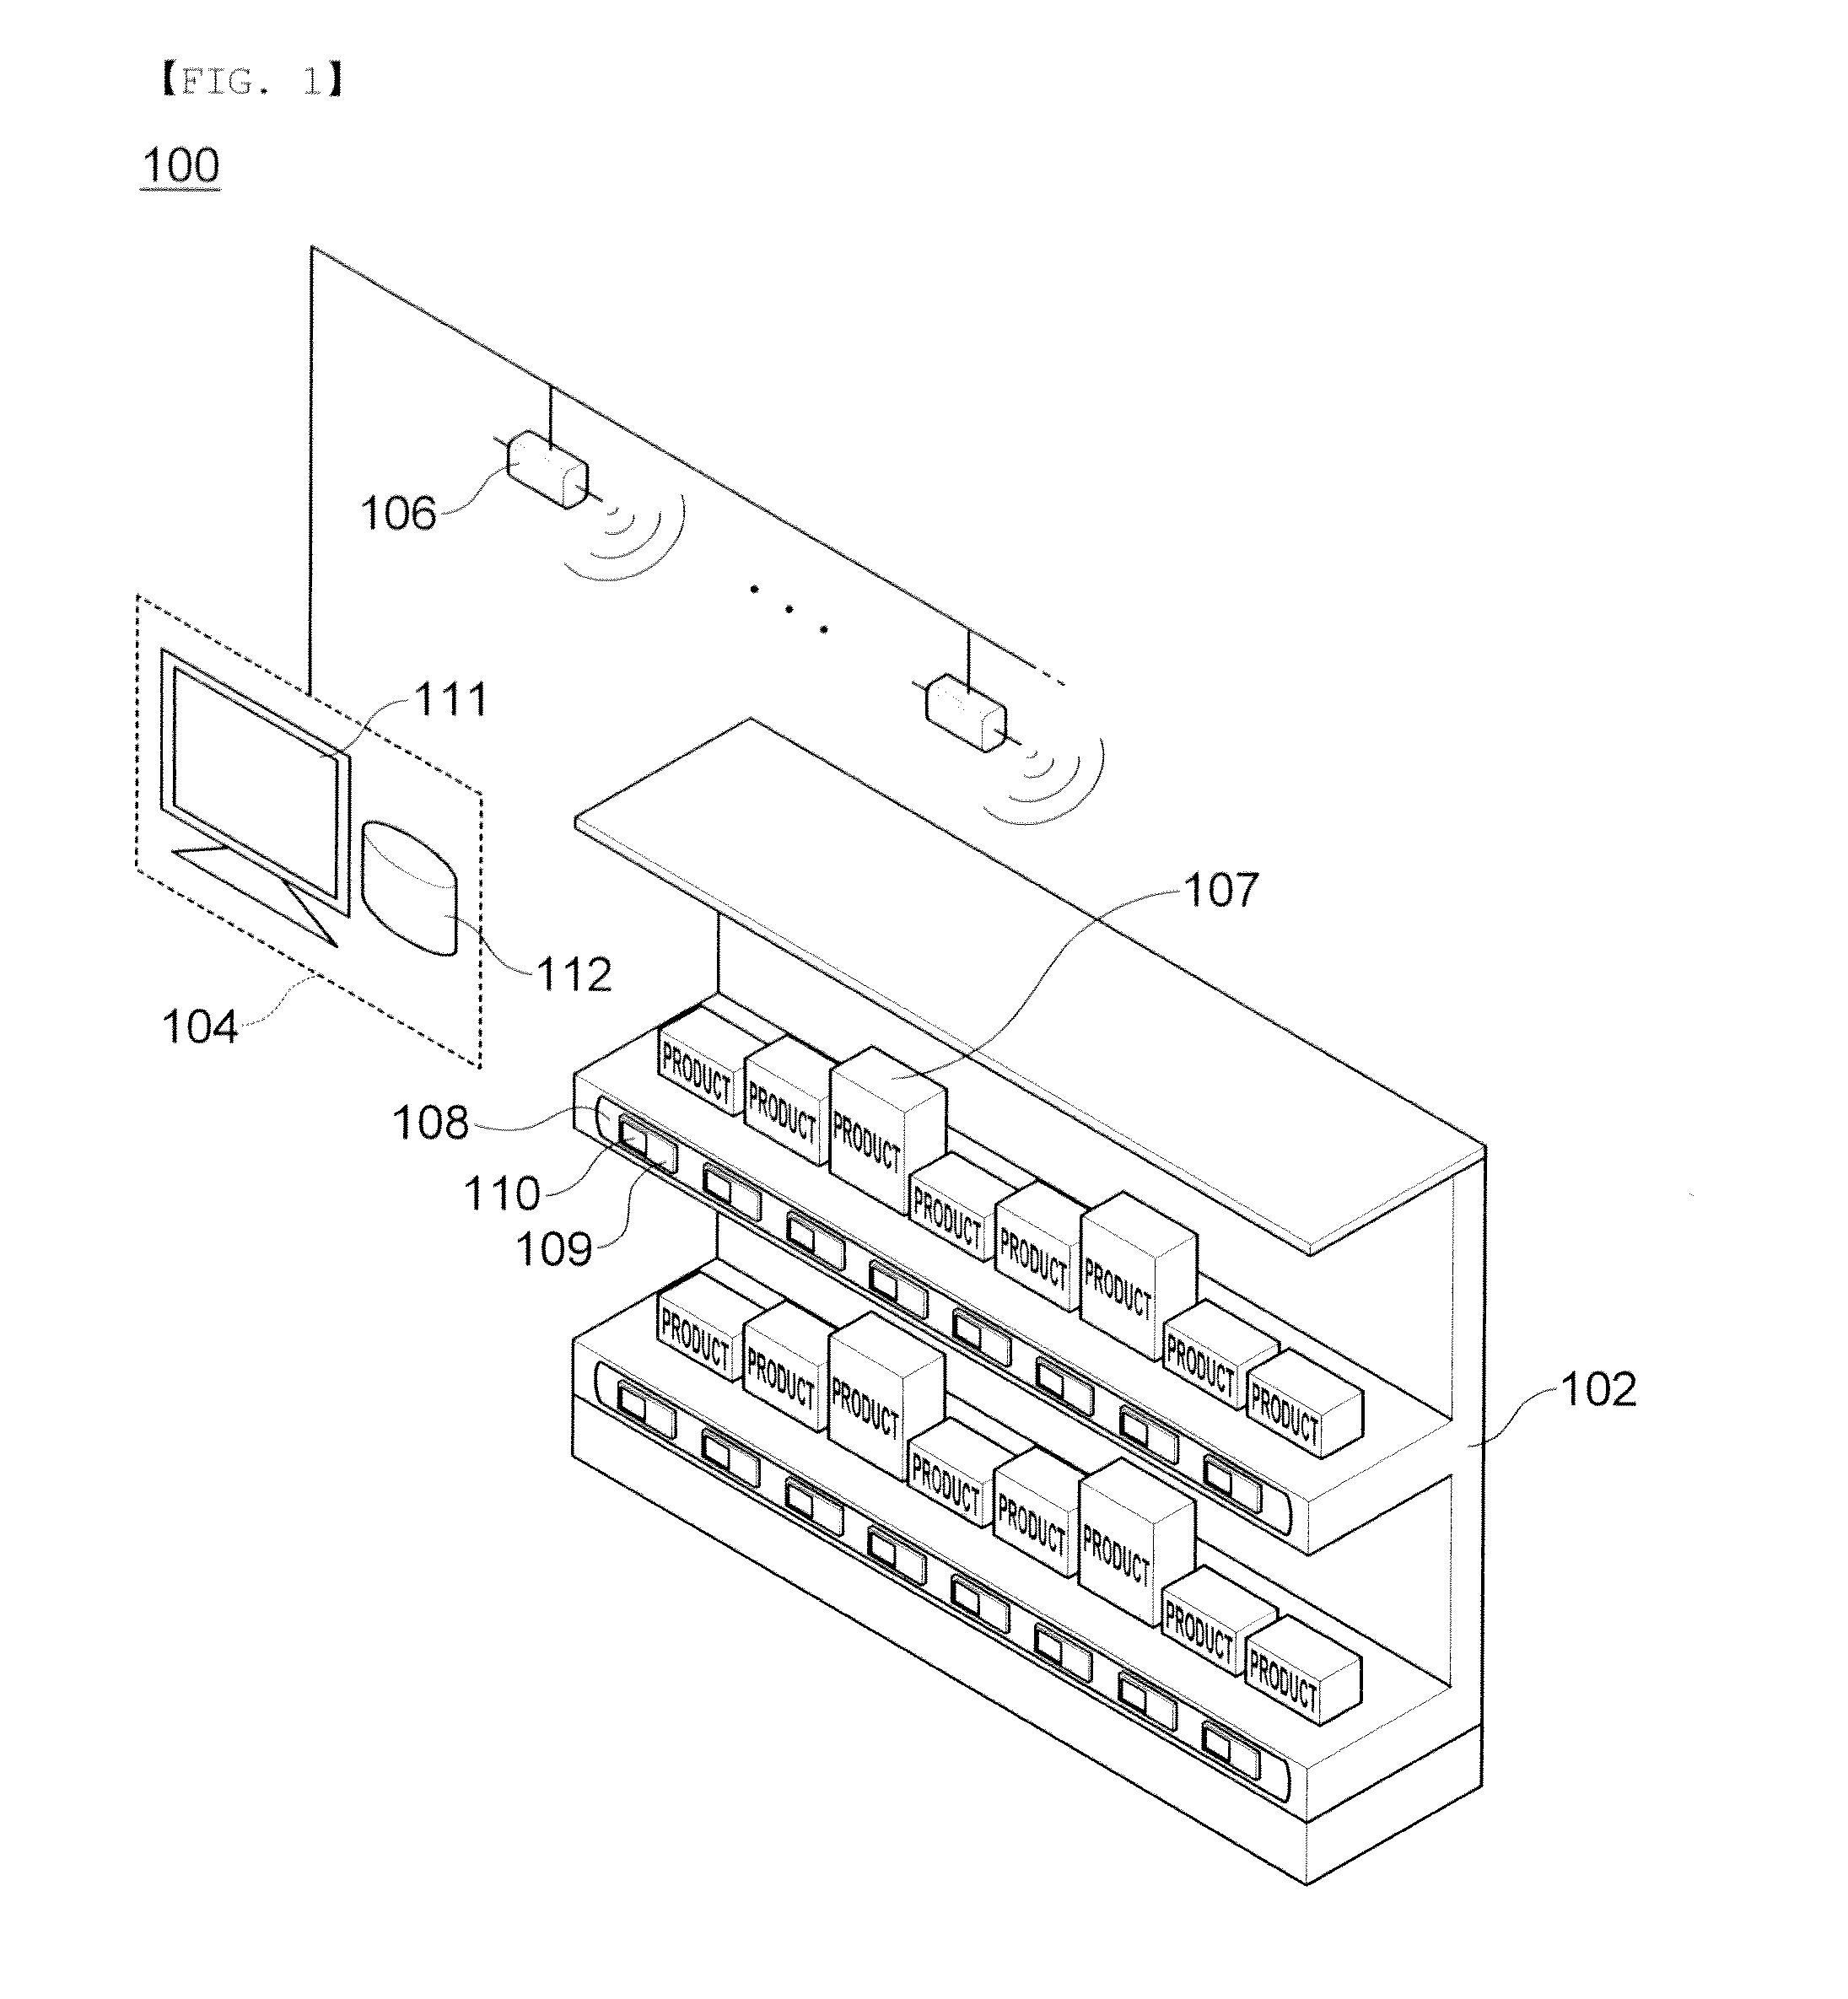 Electronic shelf label system and communicating method using the same